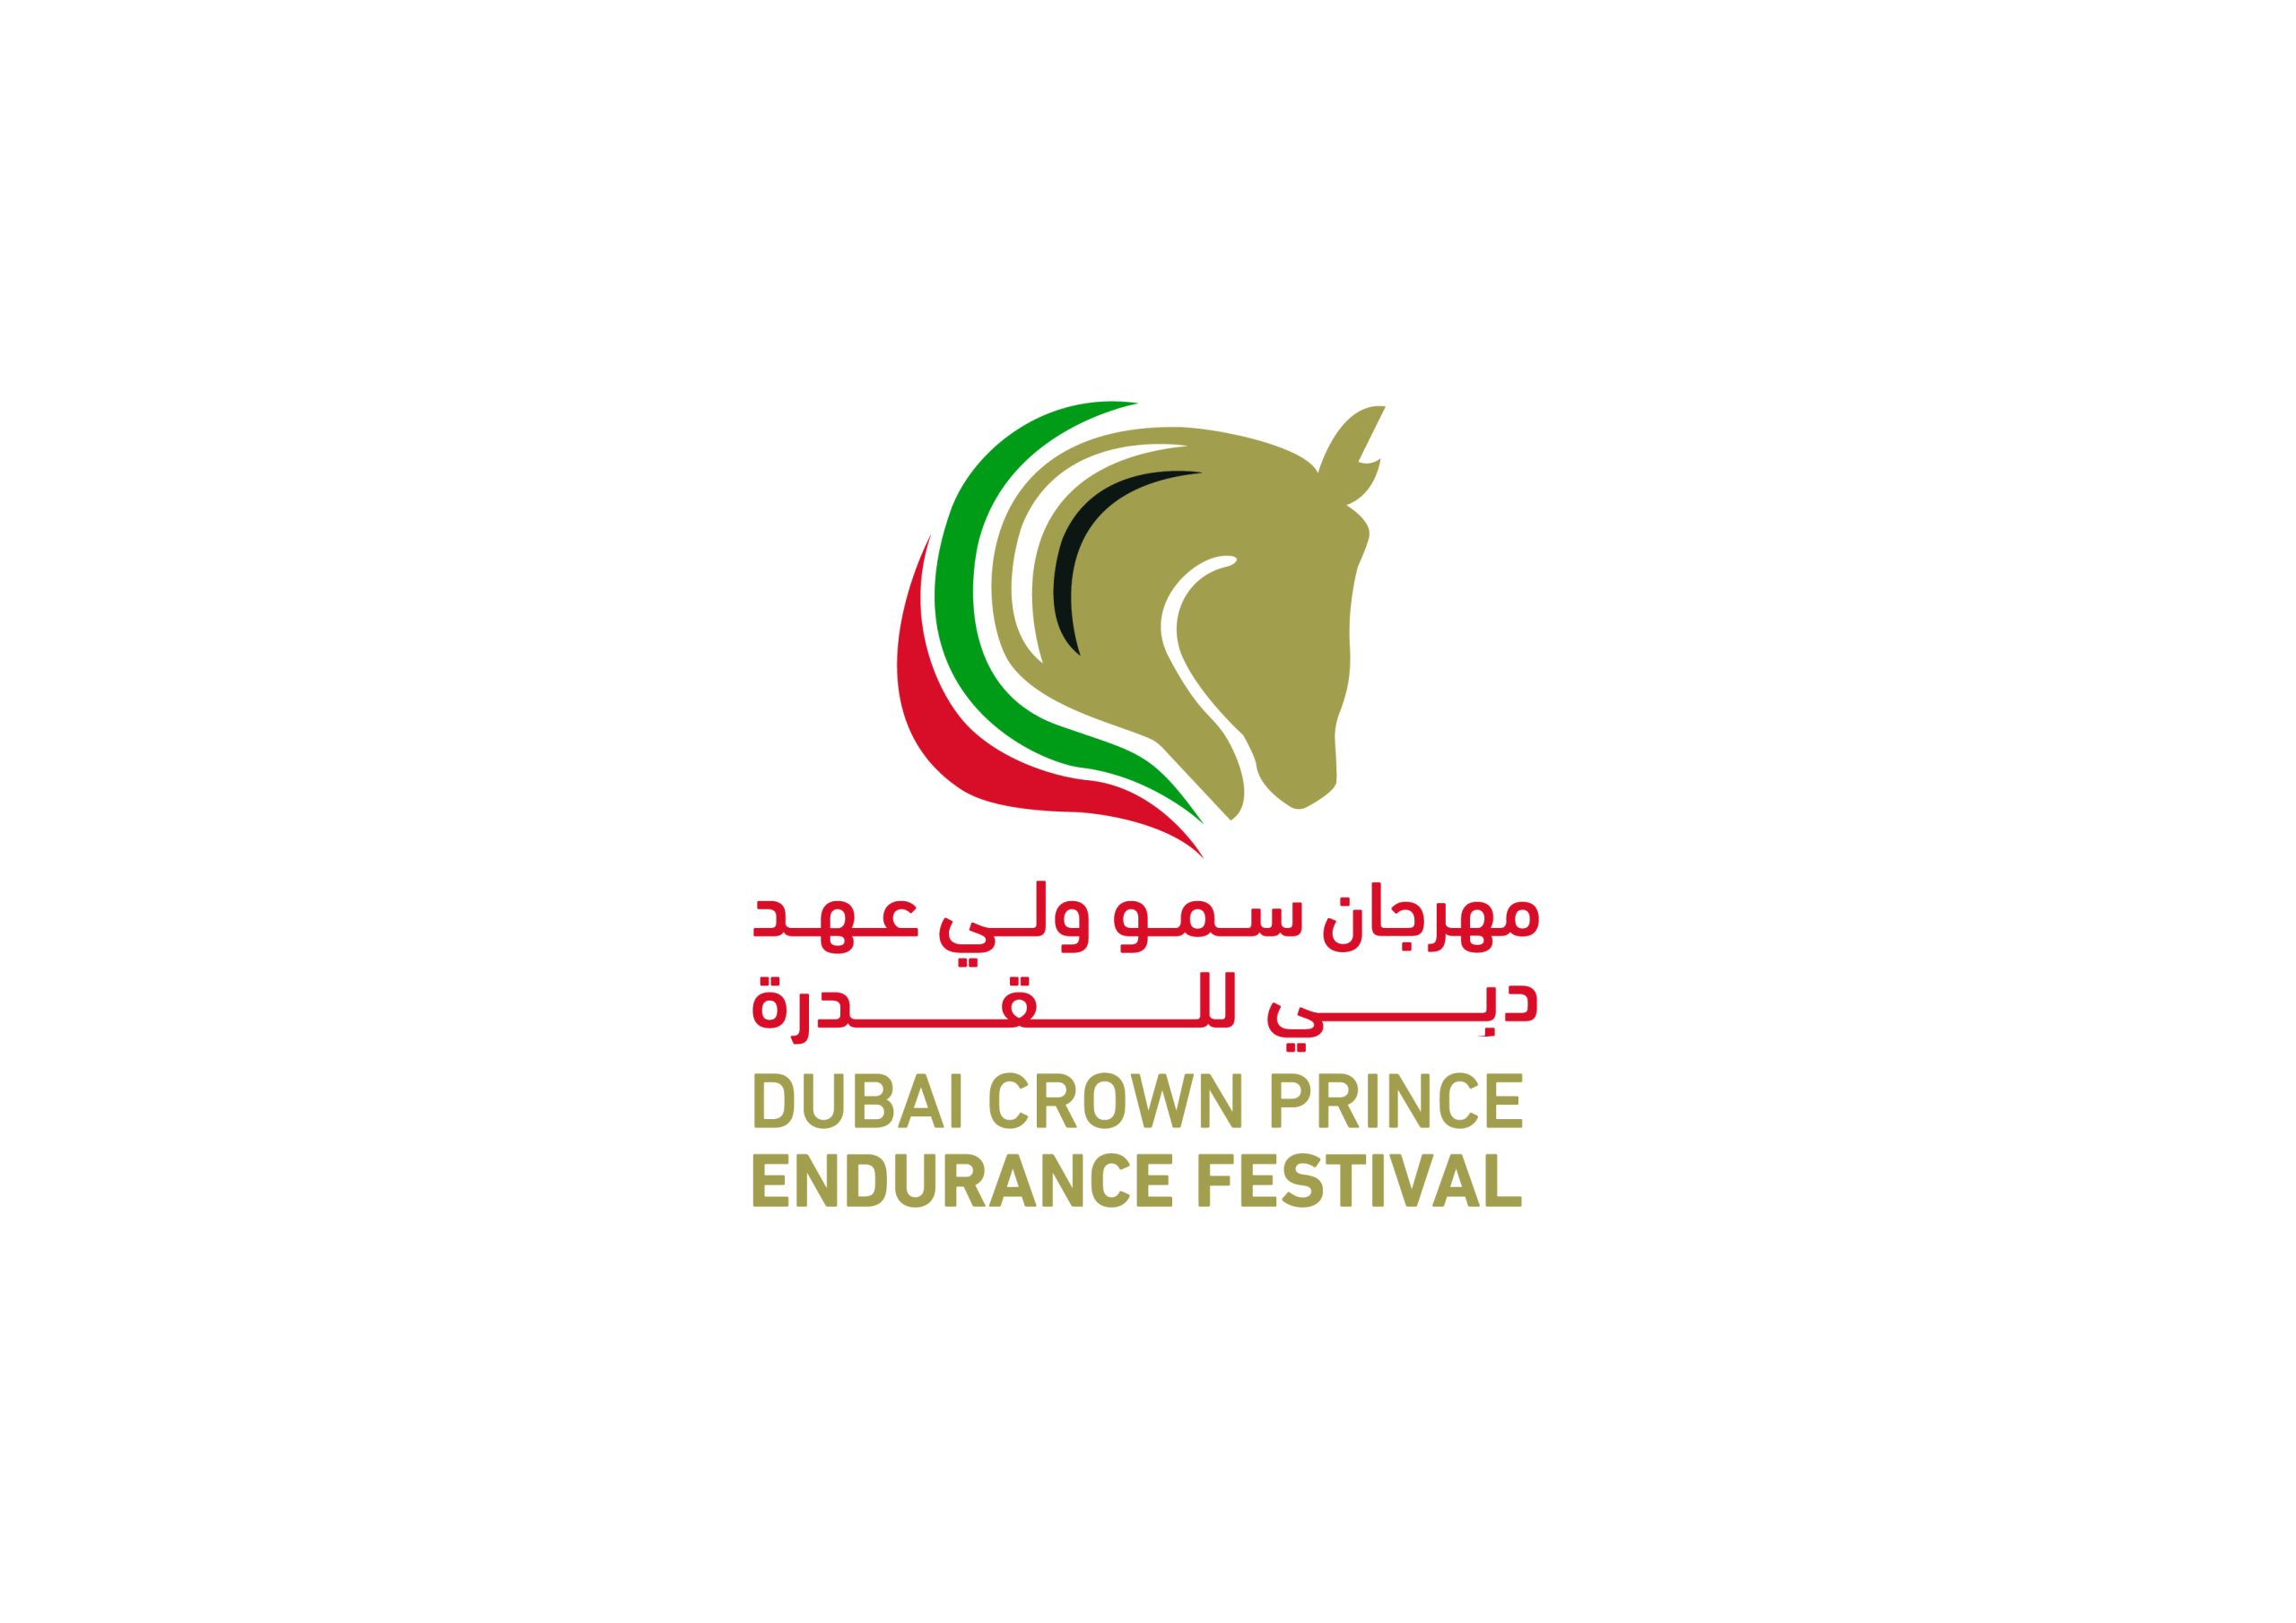 Dubai Crown Prince Endurance Festival